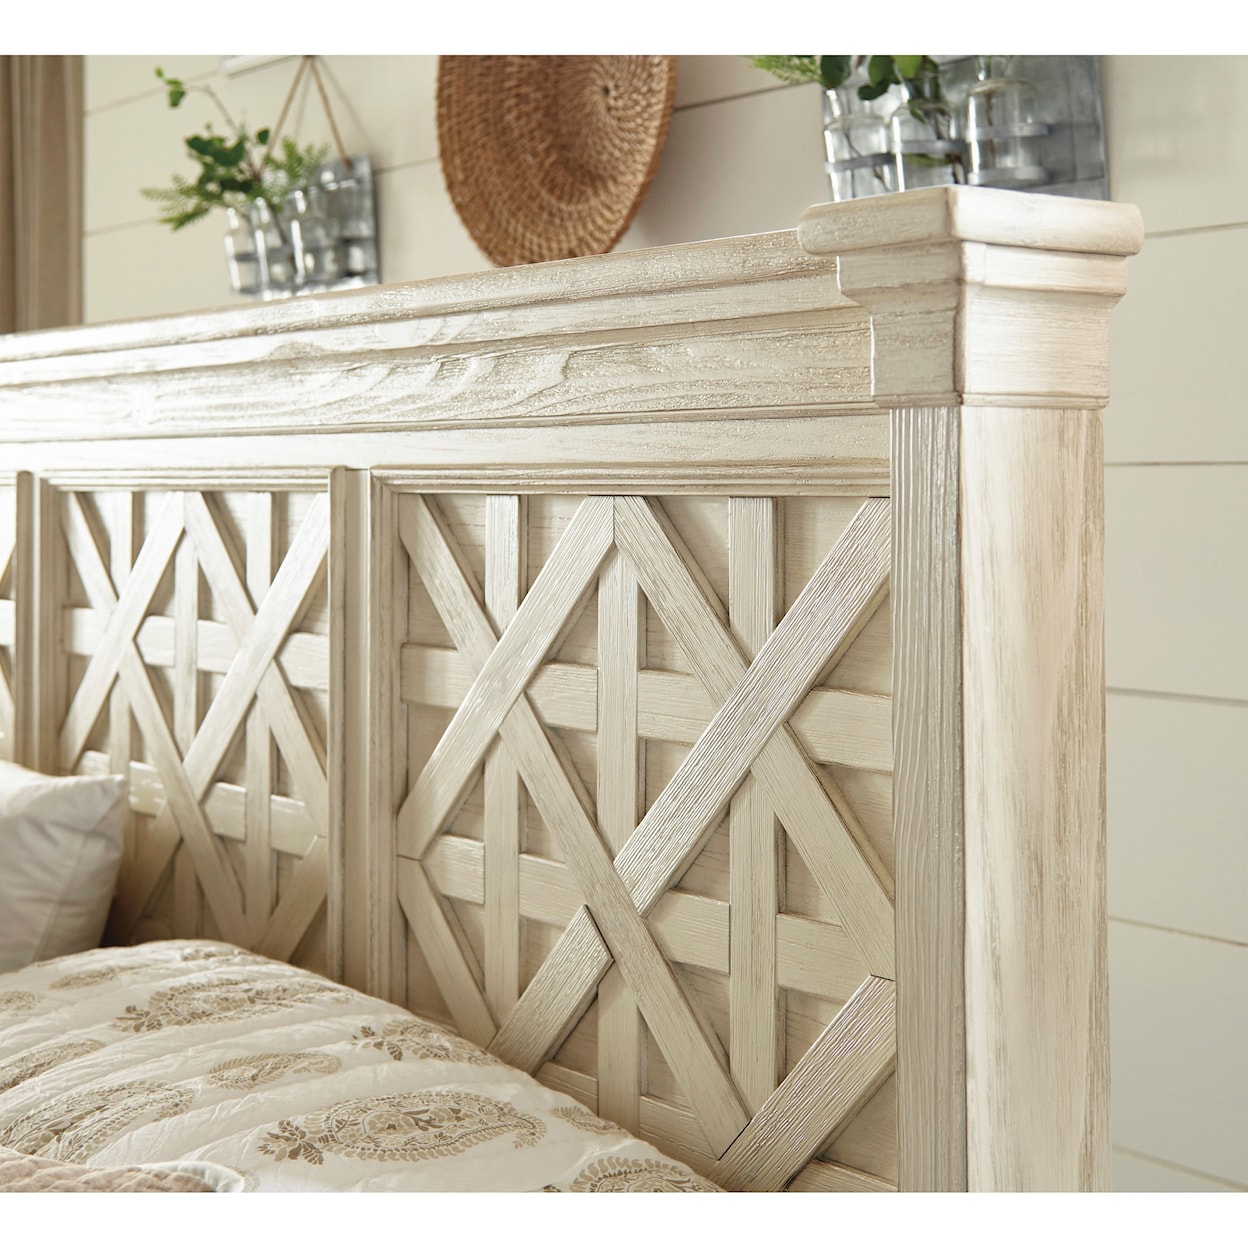 Ashley Furniture Signature Design Bolanburg King Panel Bed